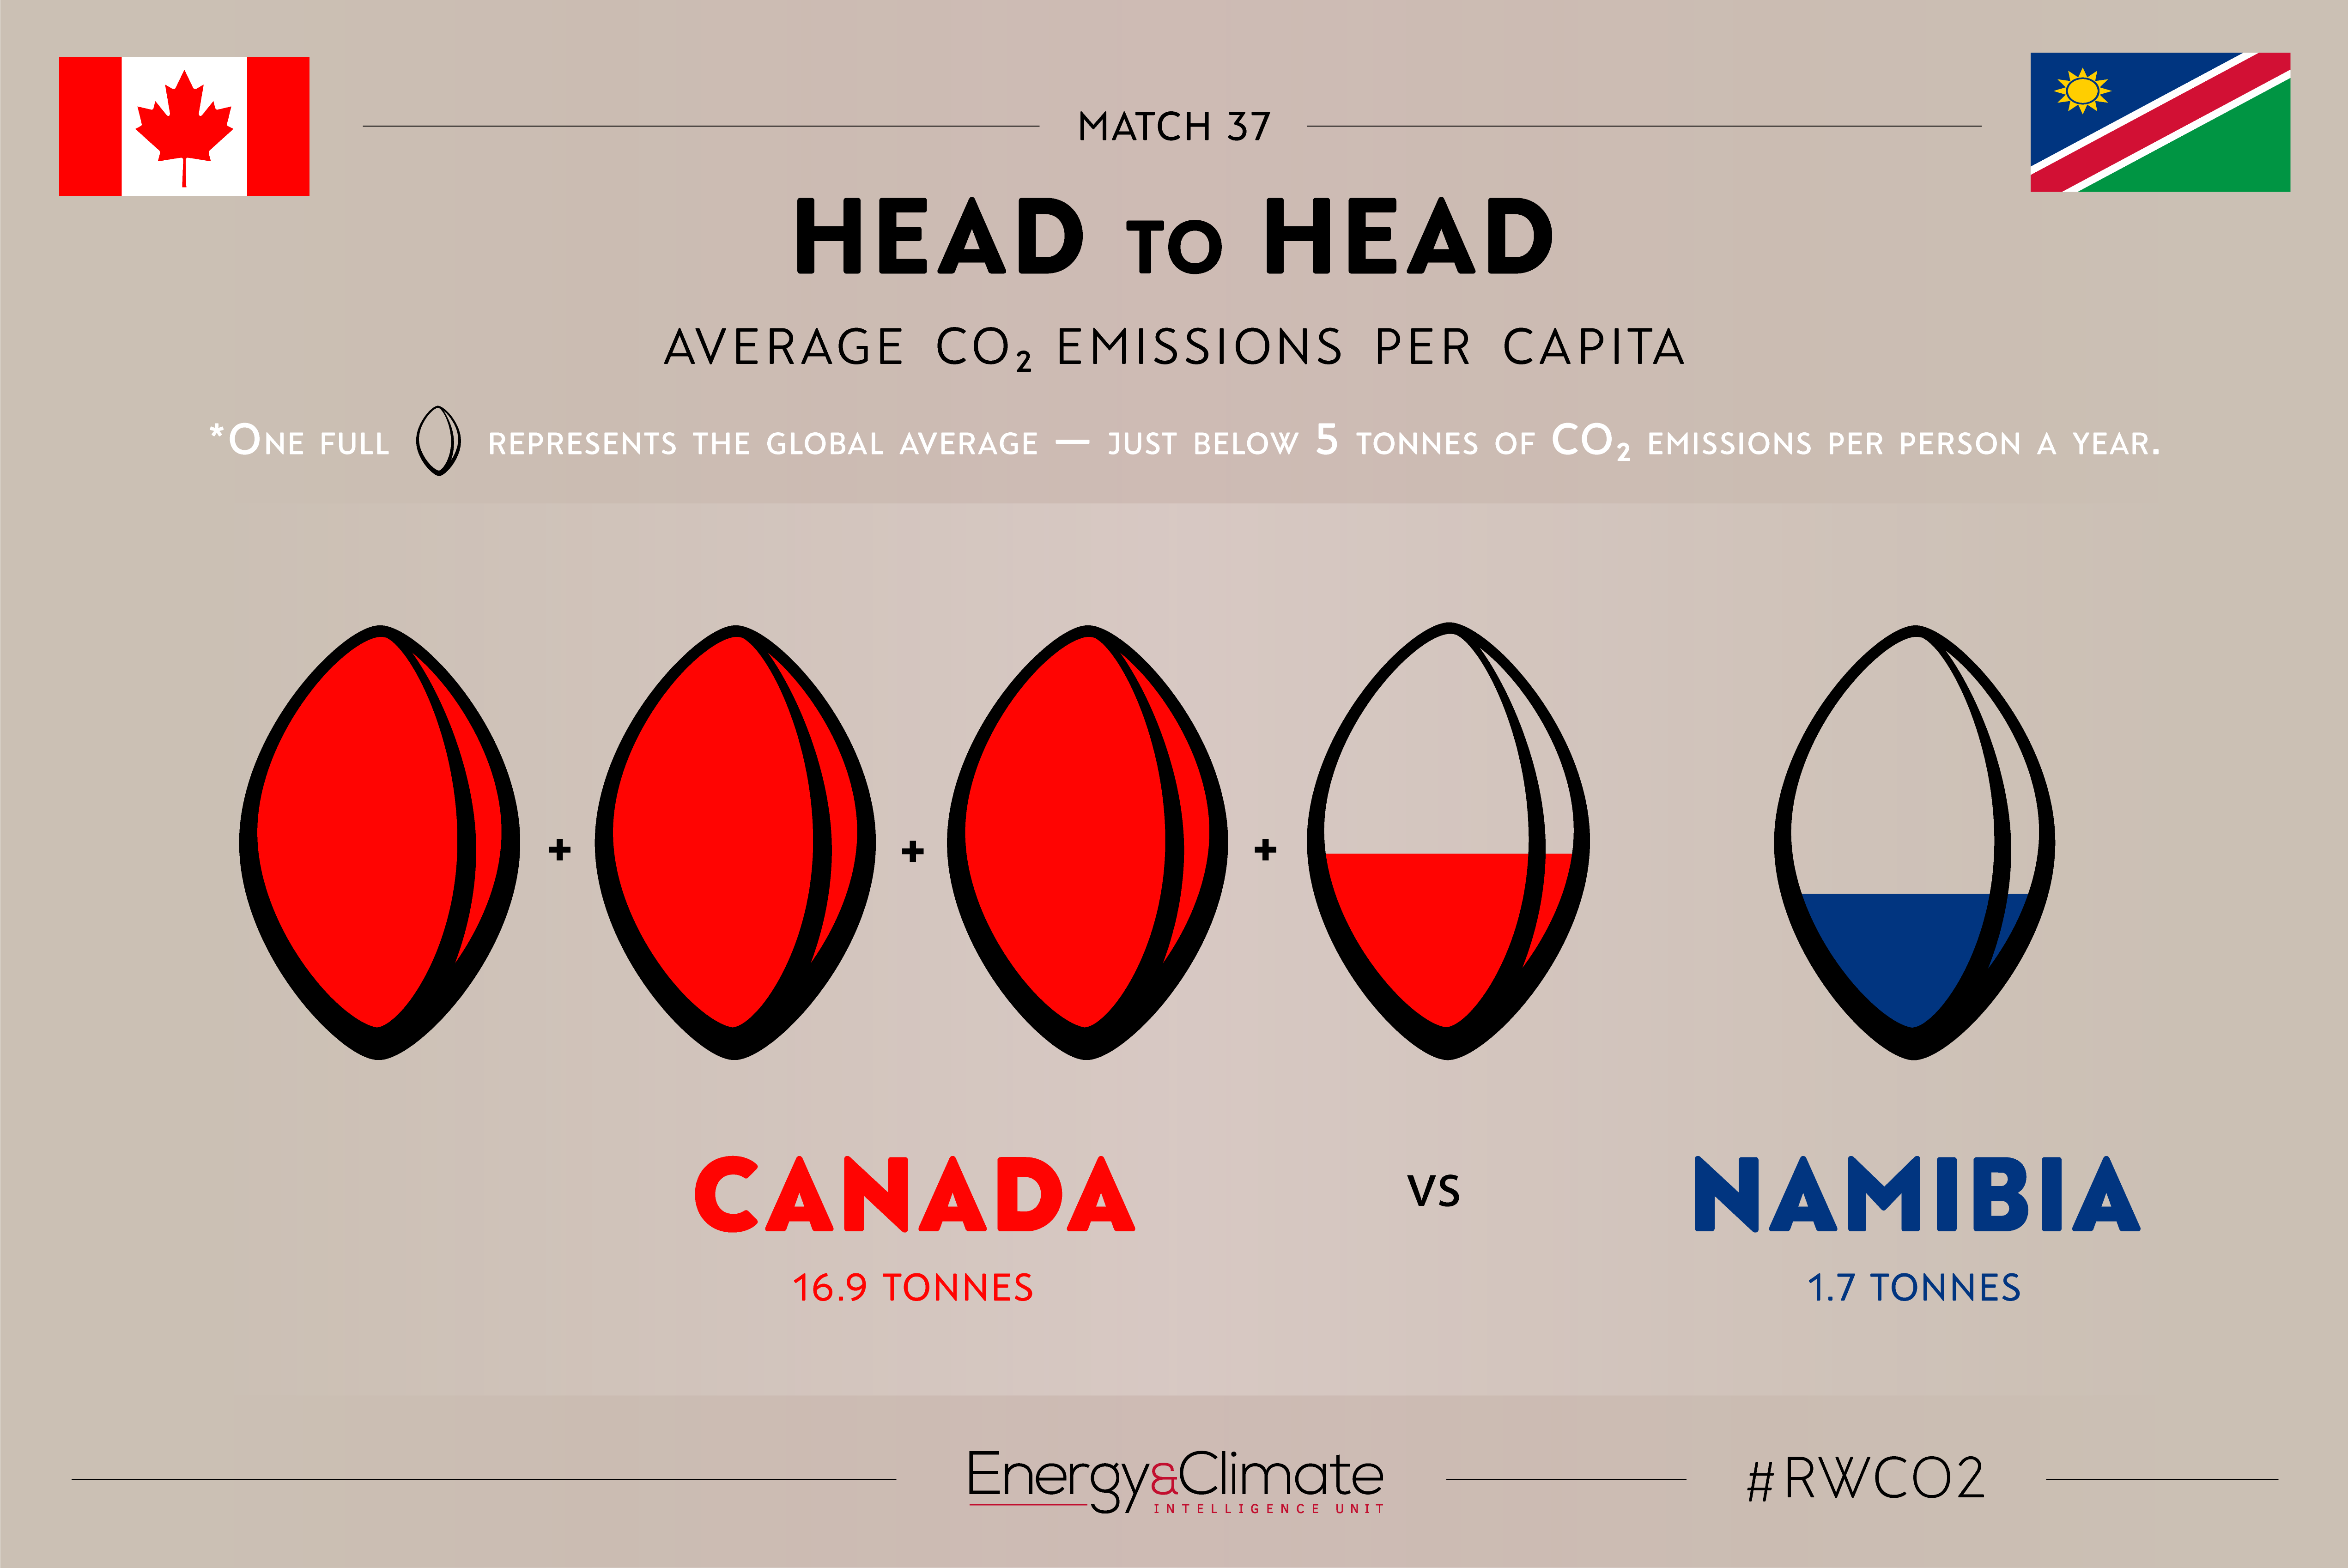 Canada v Namibia - per capita emissions